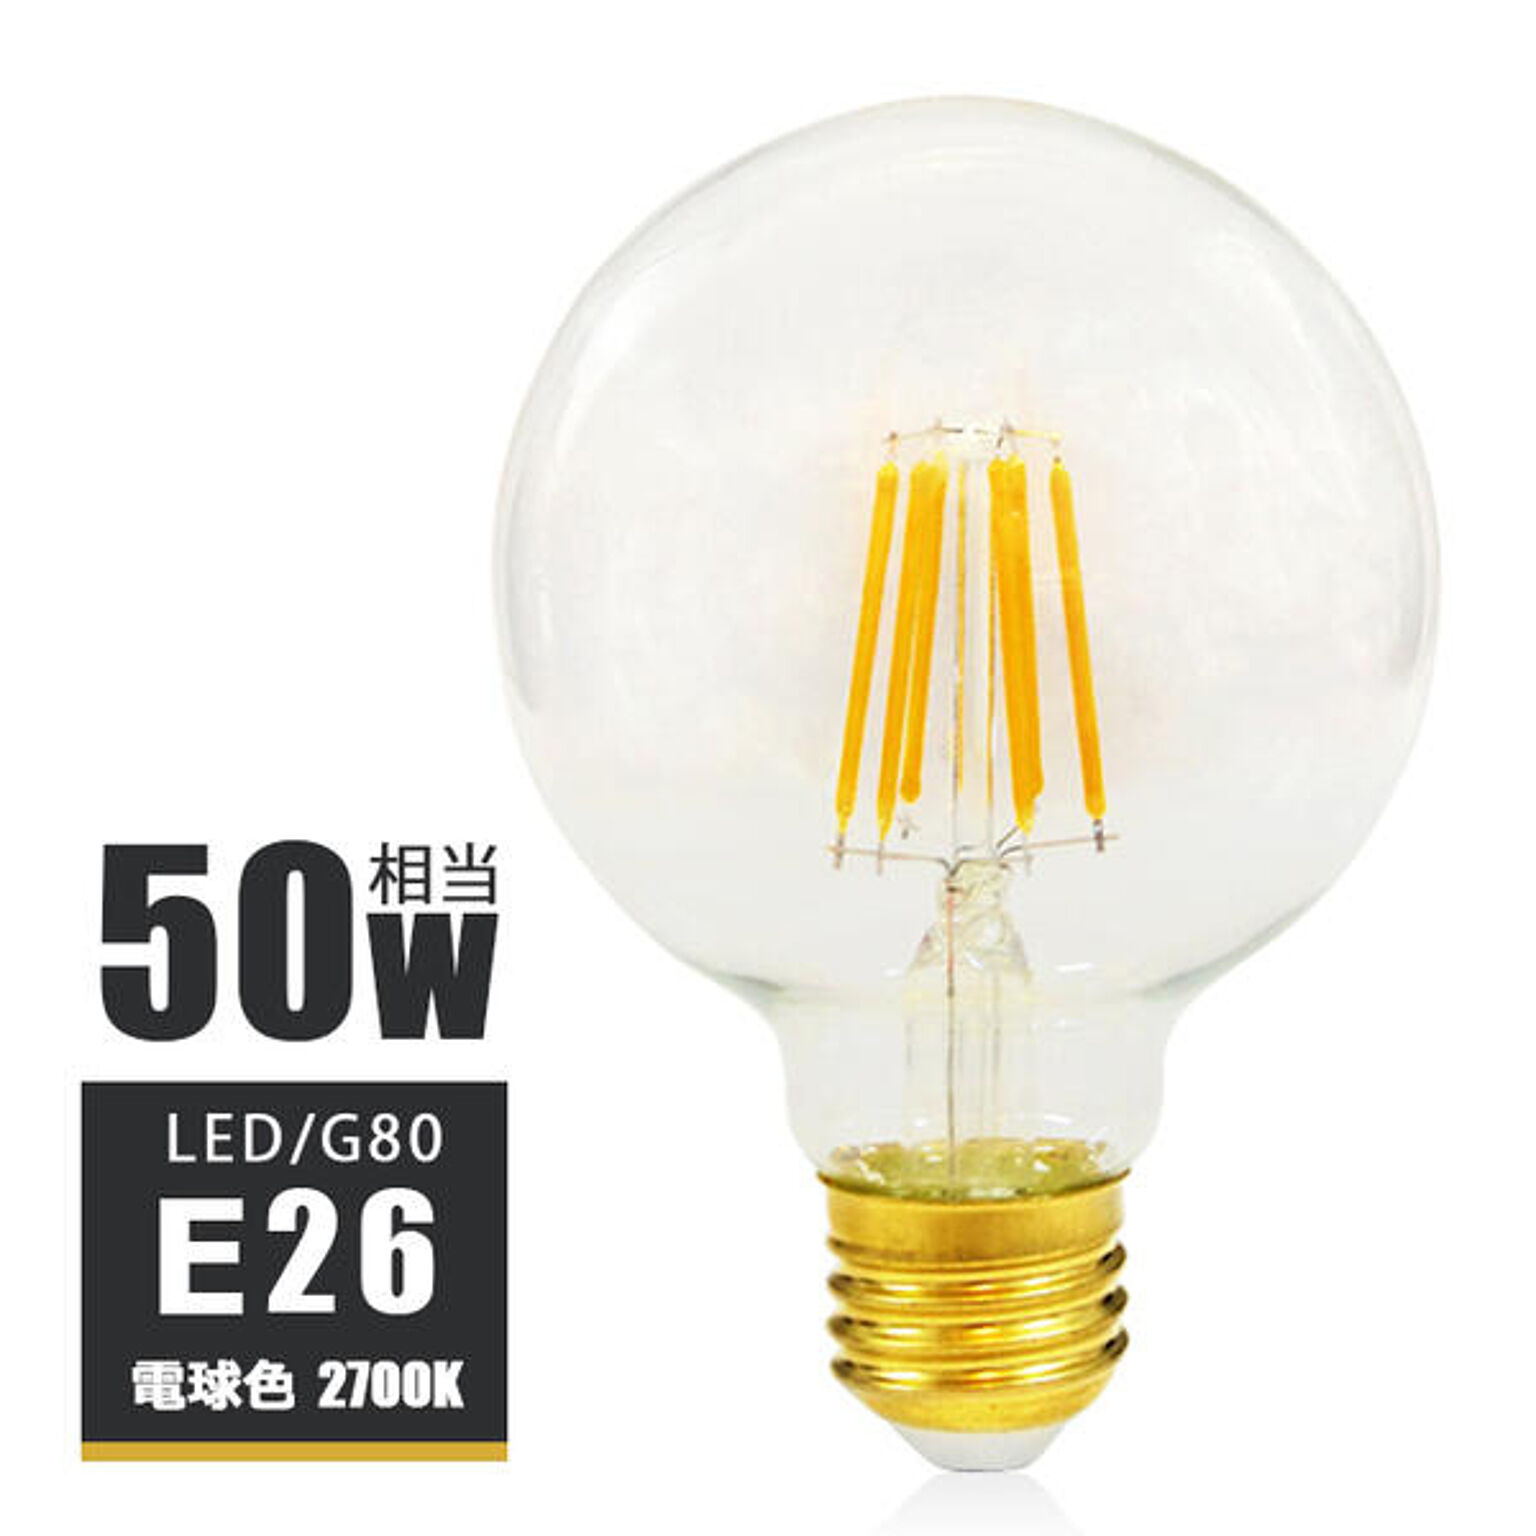 LED エジソン電球 E26 HKR-6G80T-E26A 光ノ屋照明